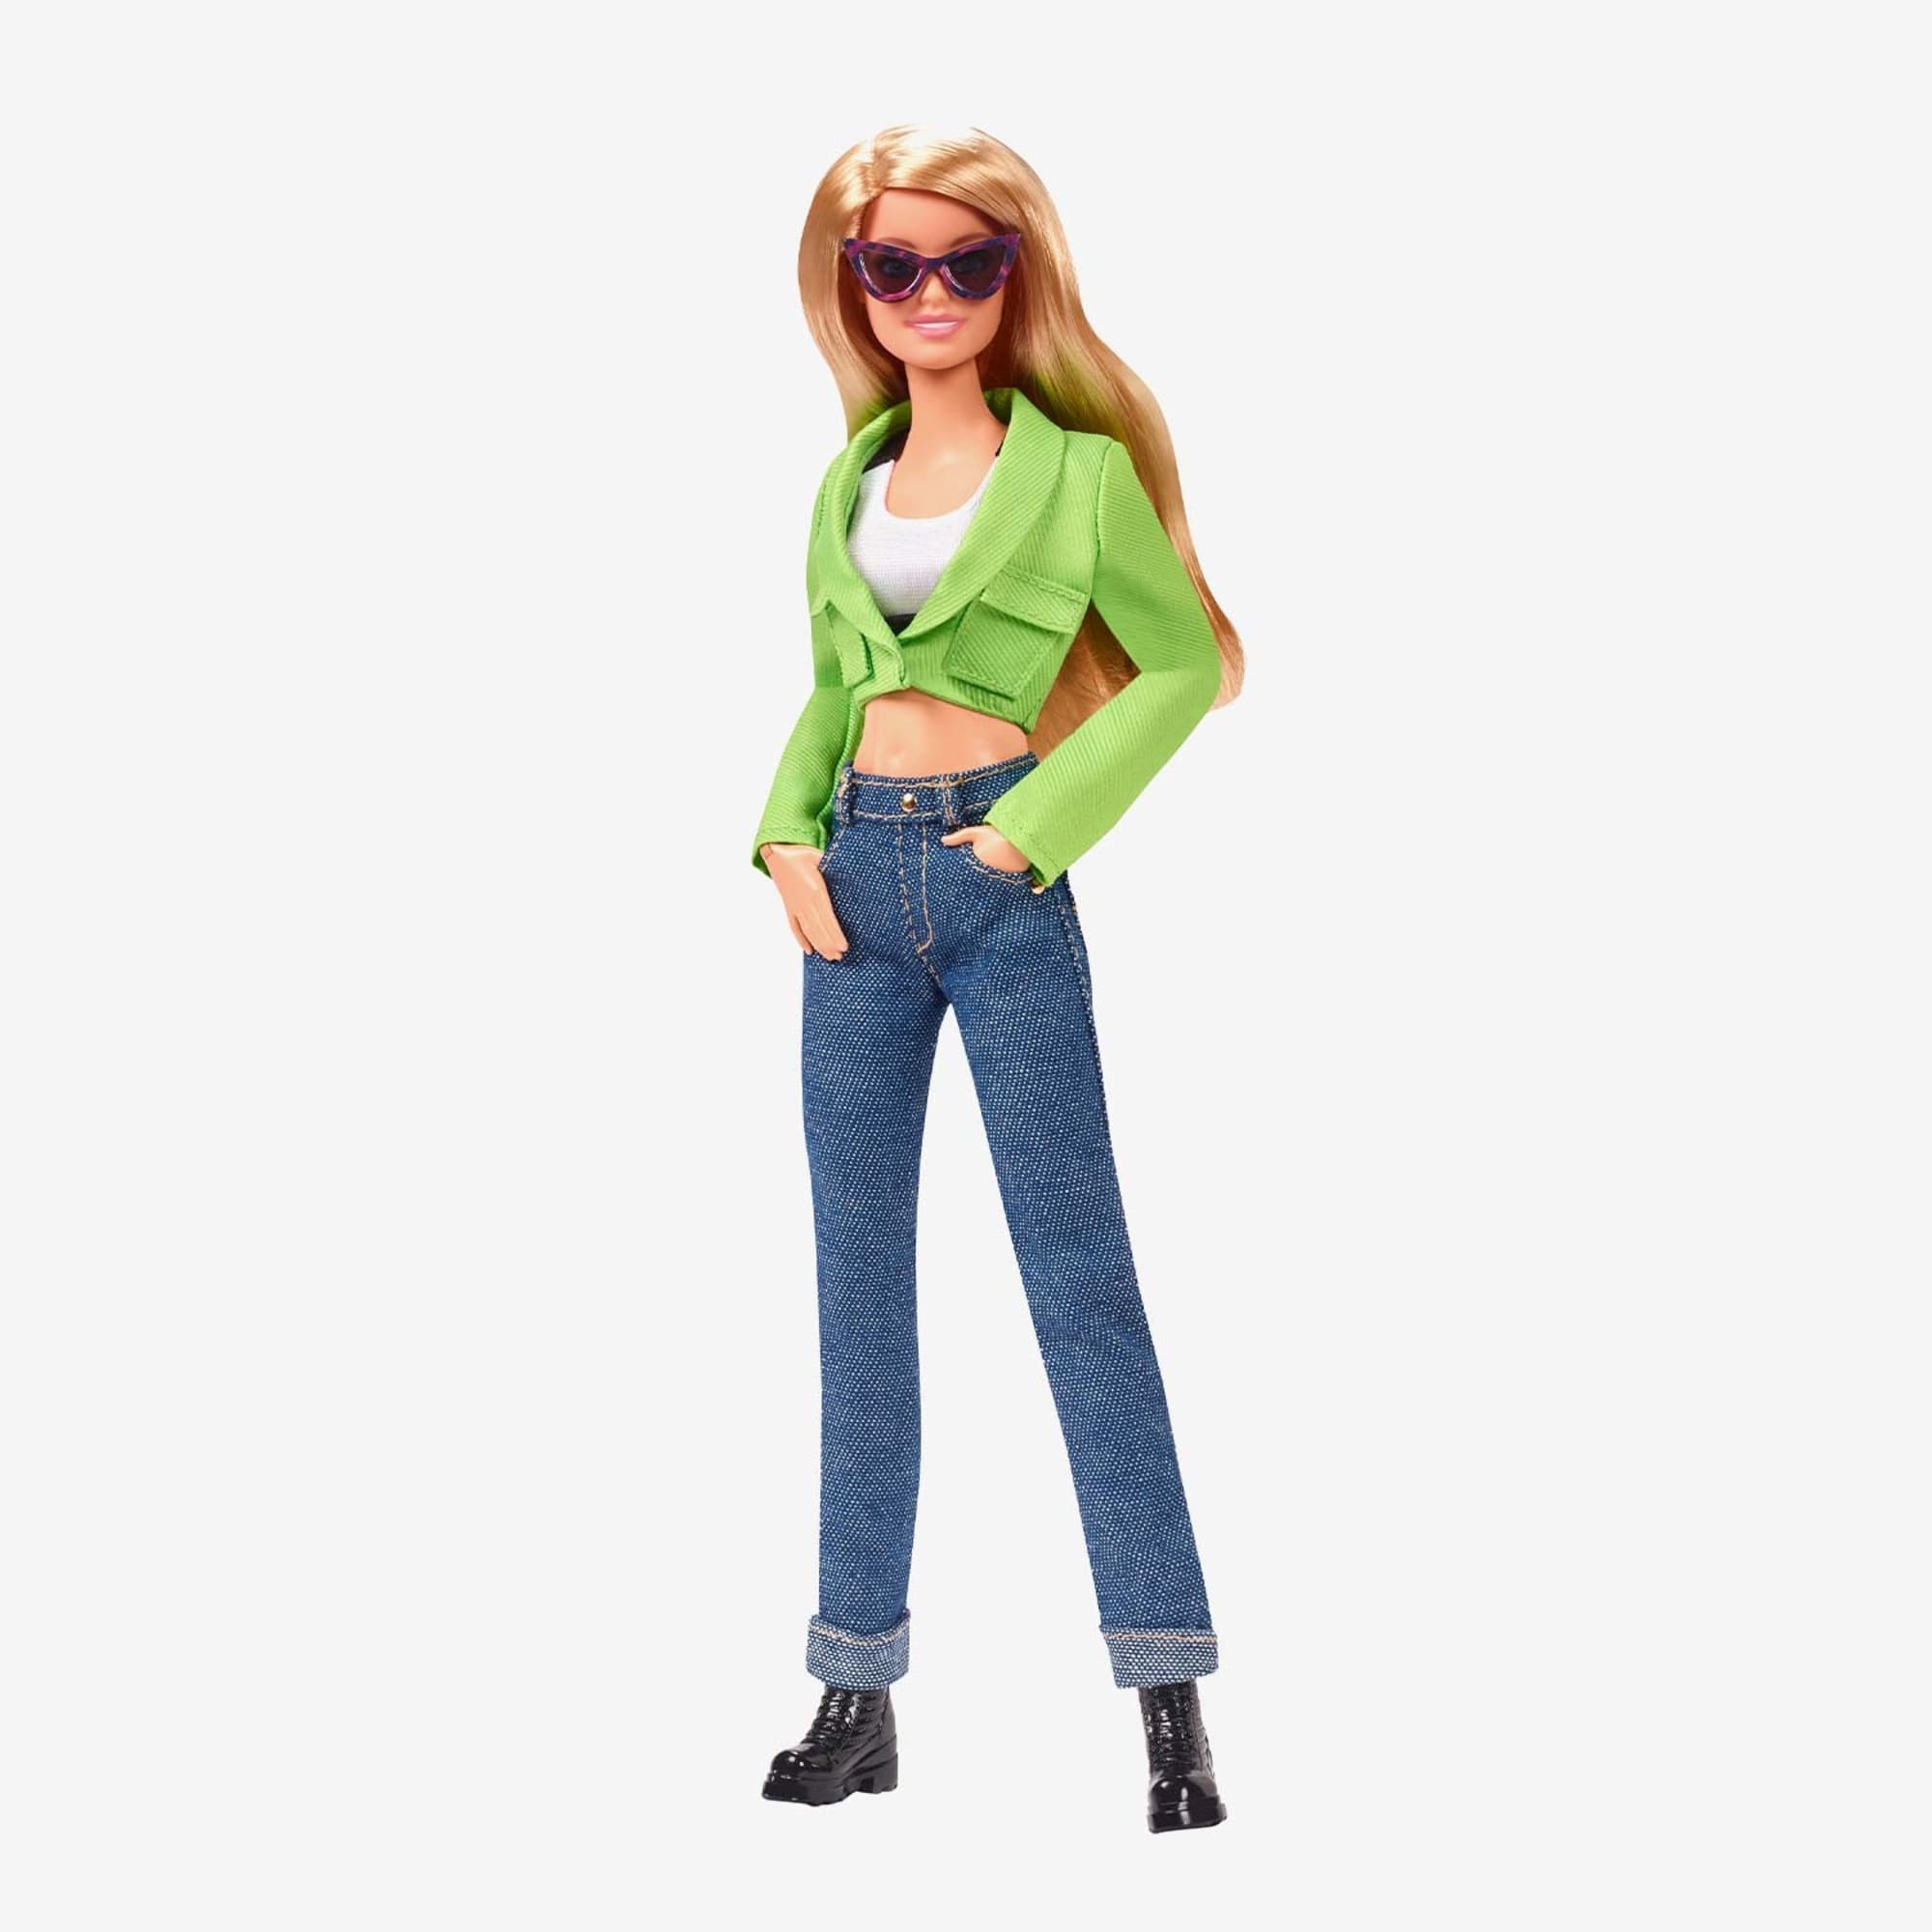 BarbieStyle Fashion Studio & Doll Set – Mattel Creations